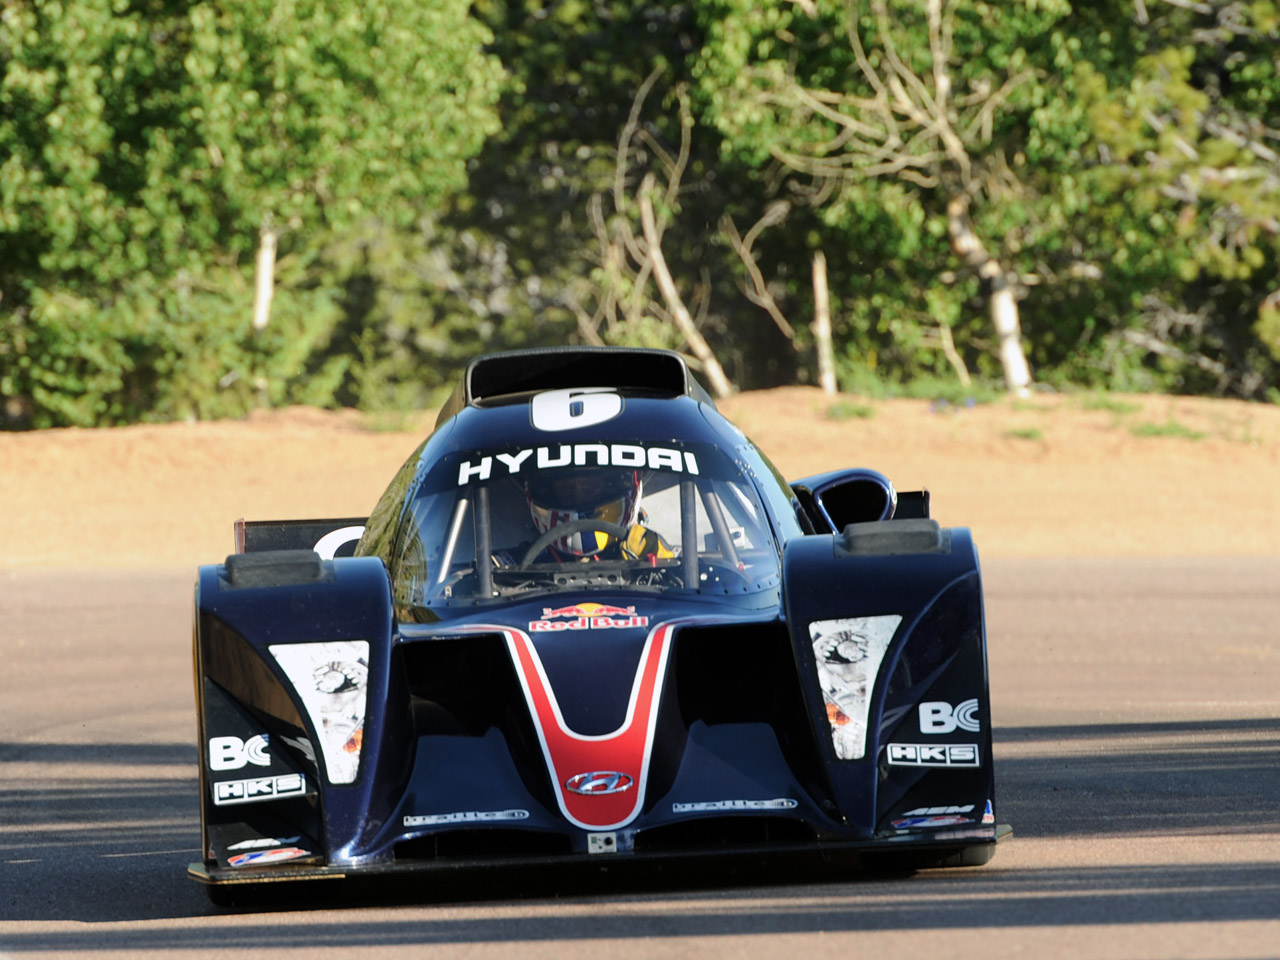 2010 Rhys Millen Racing Hyundai PM580